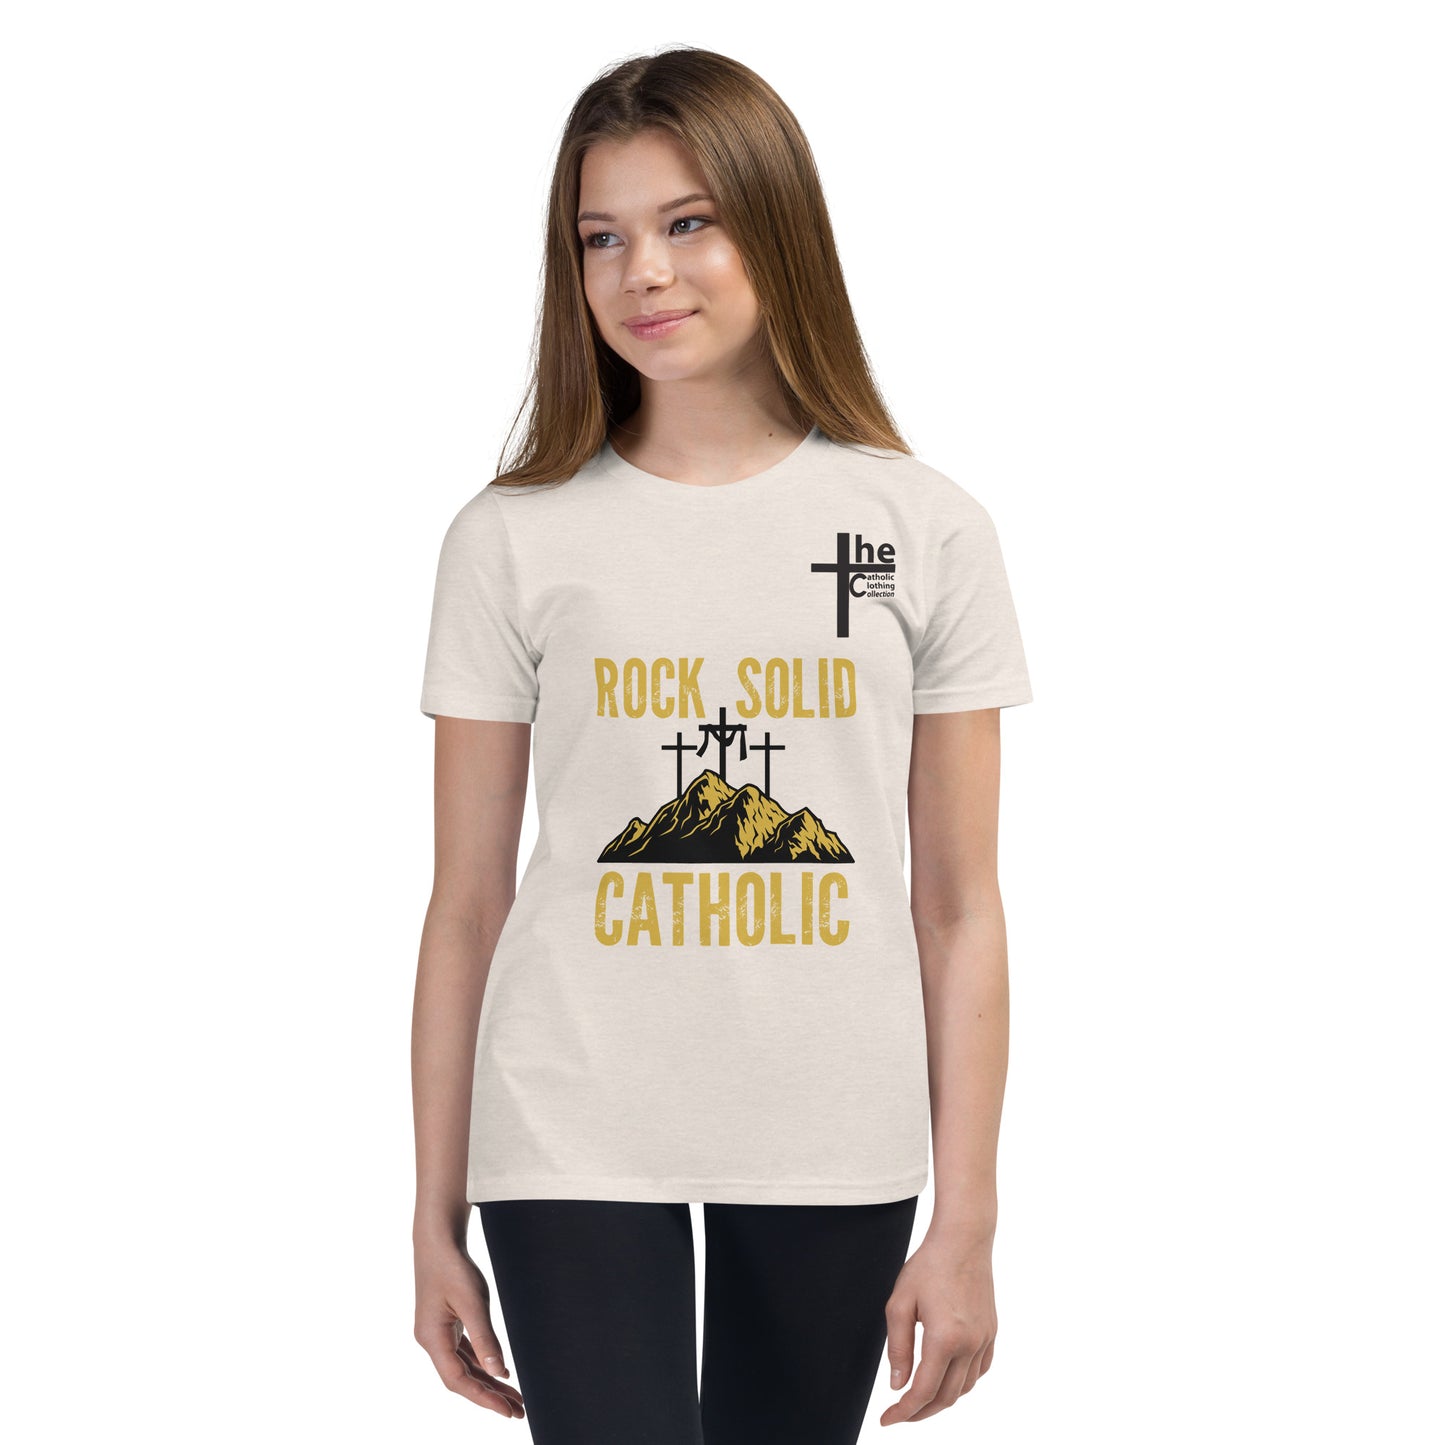 Rock Solid Catholic Children's t-Shirt